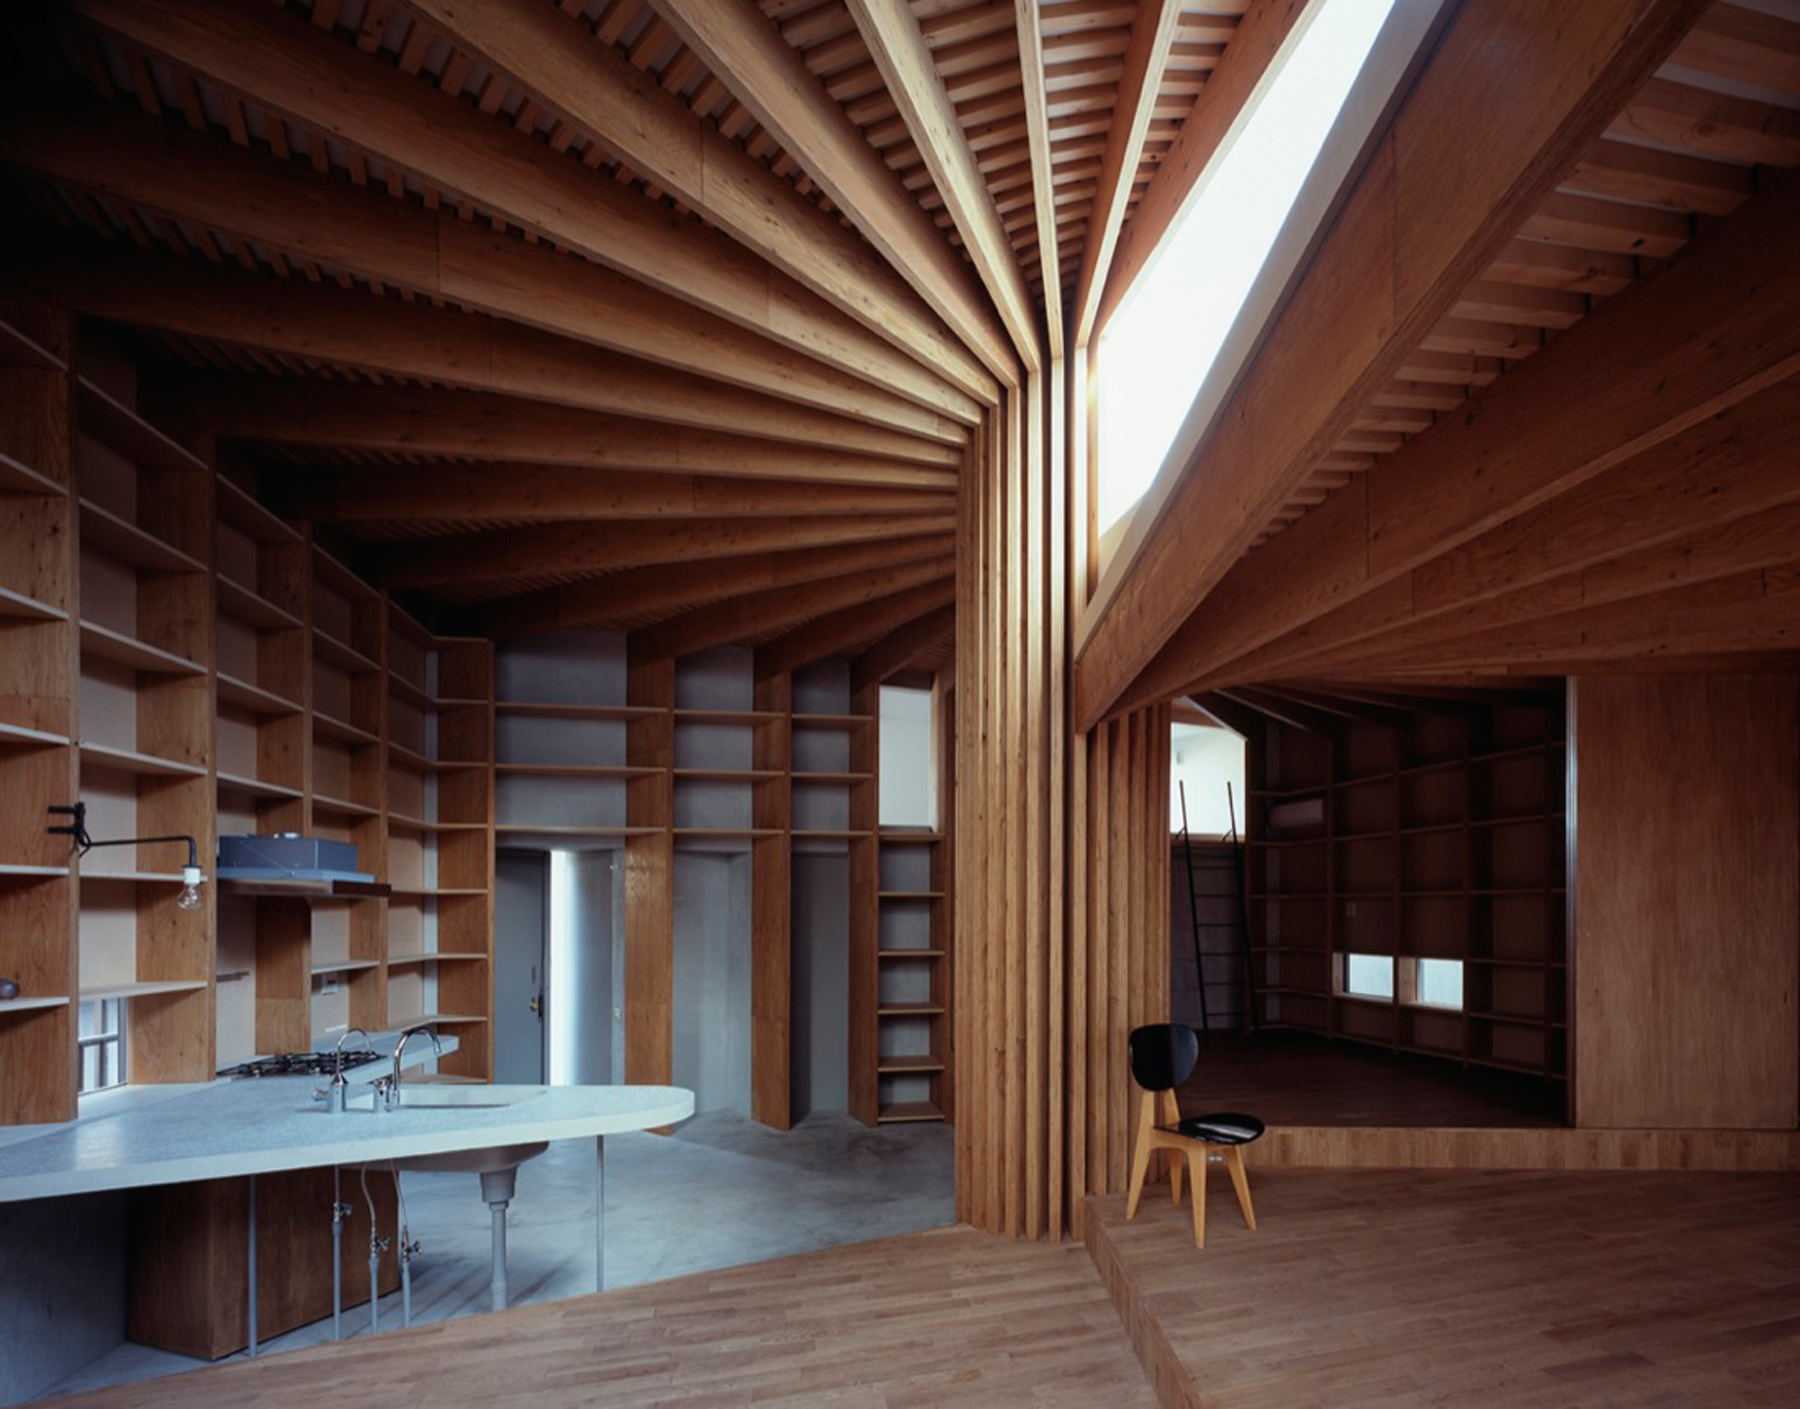 Tree House / Mount Fuji Architects Studio (22)